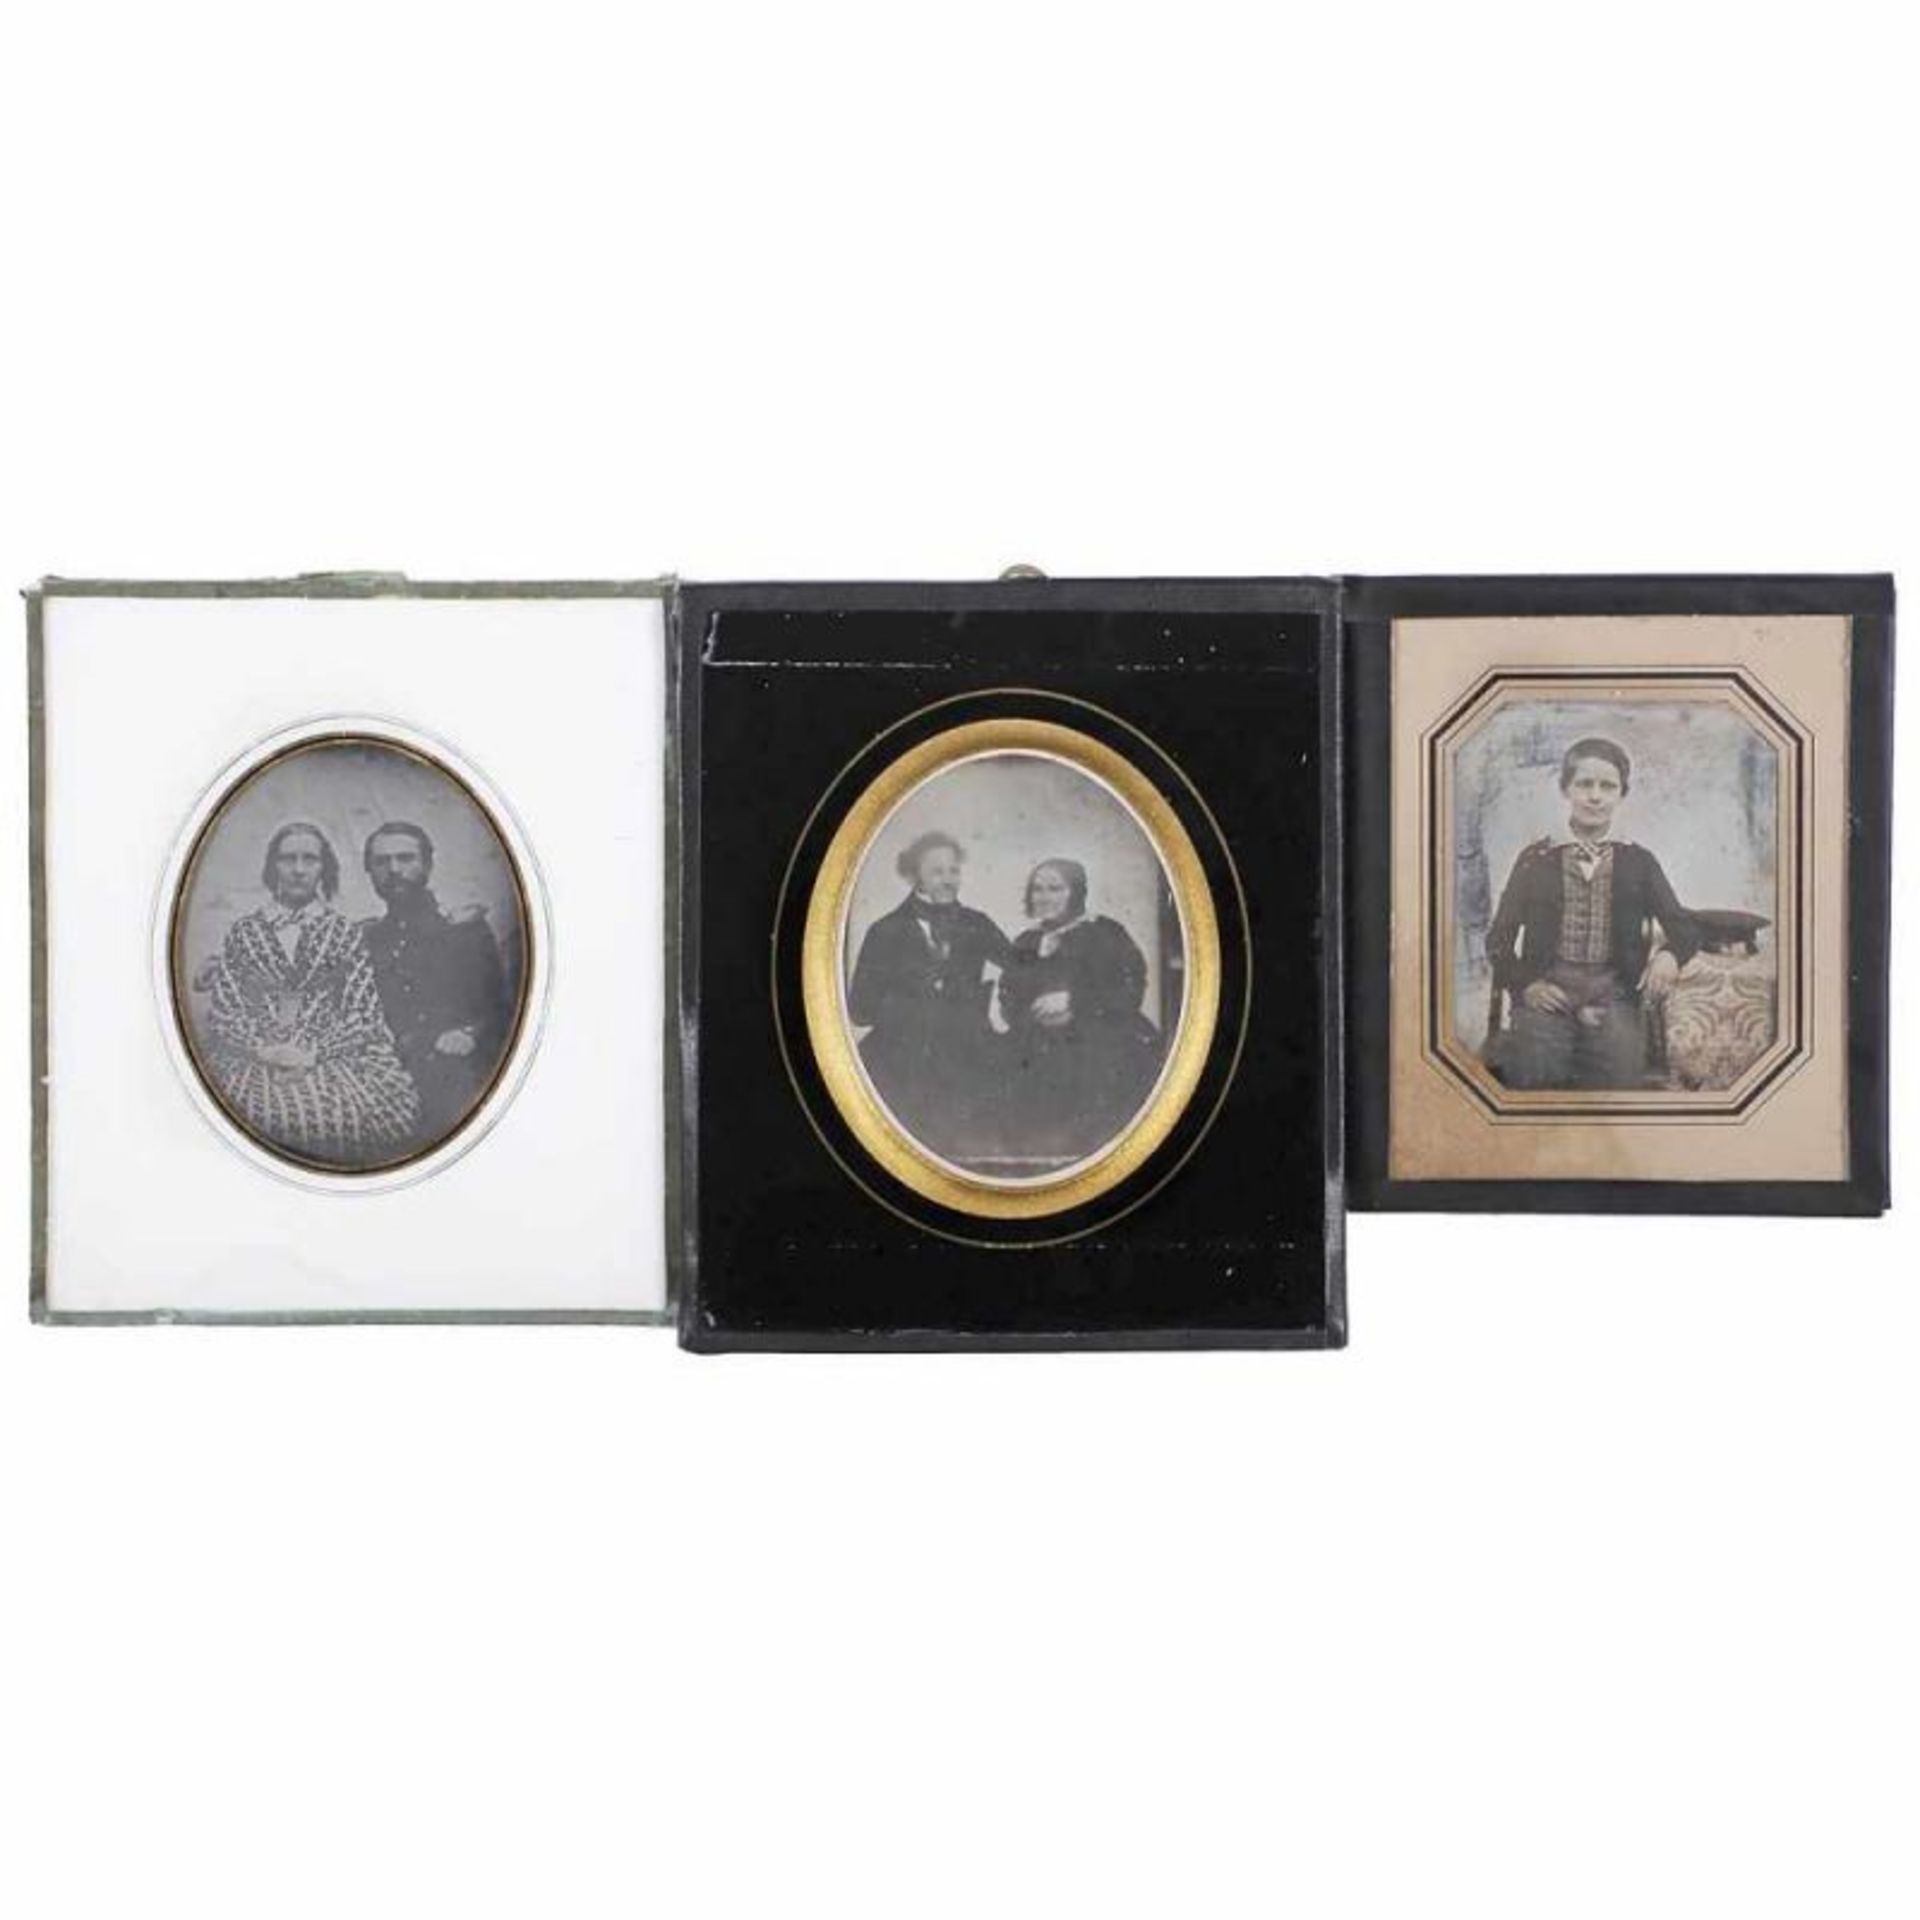 3 Daguerreotypien (Sechstelplatte), um 1845-50 1) Deutsche Daguerreotypie, Ehepaar, etwas schwach